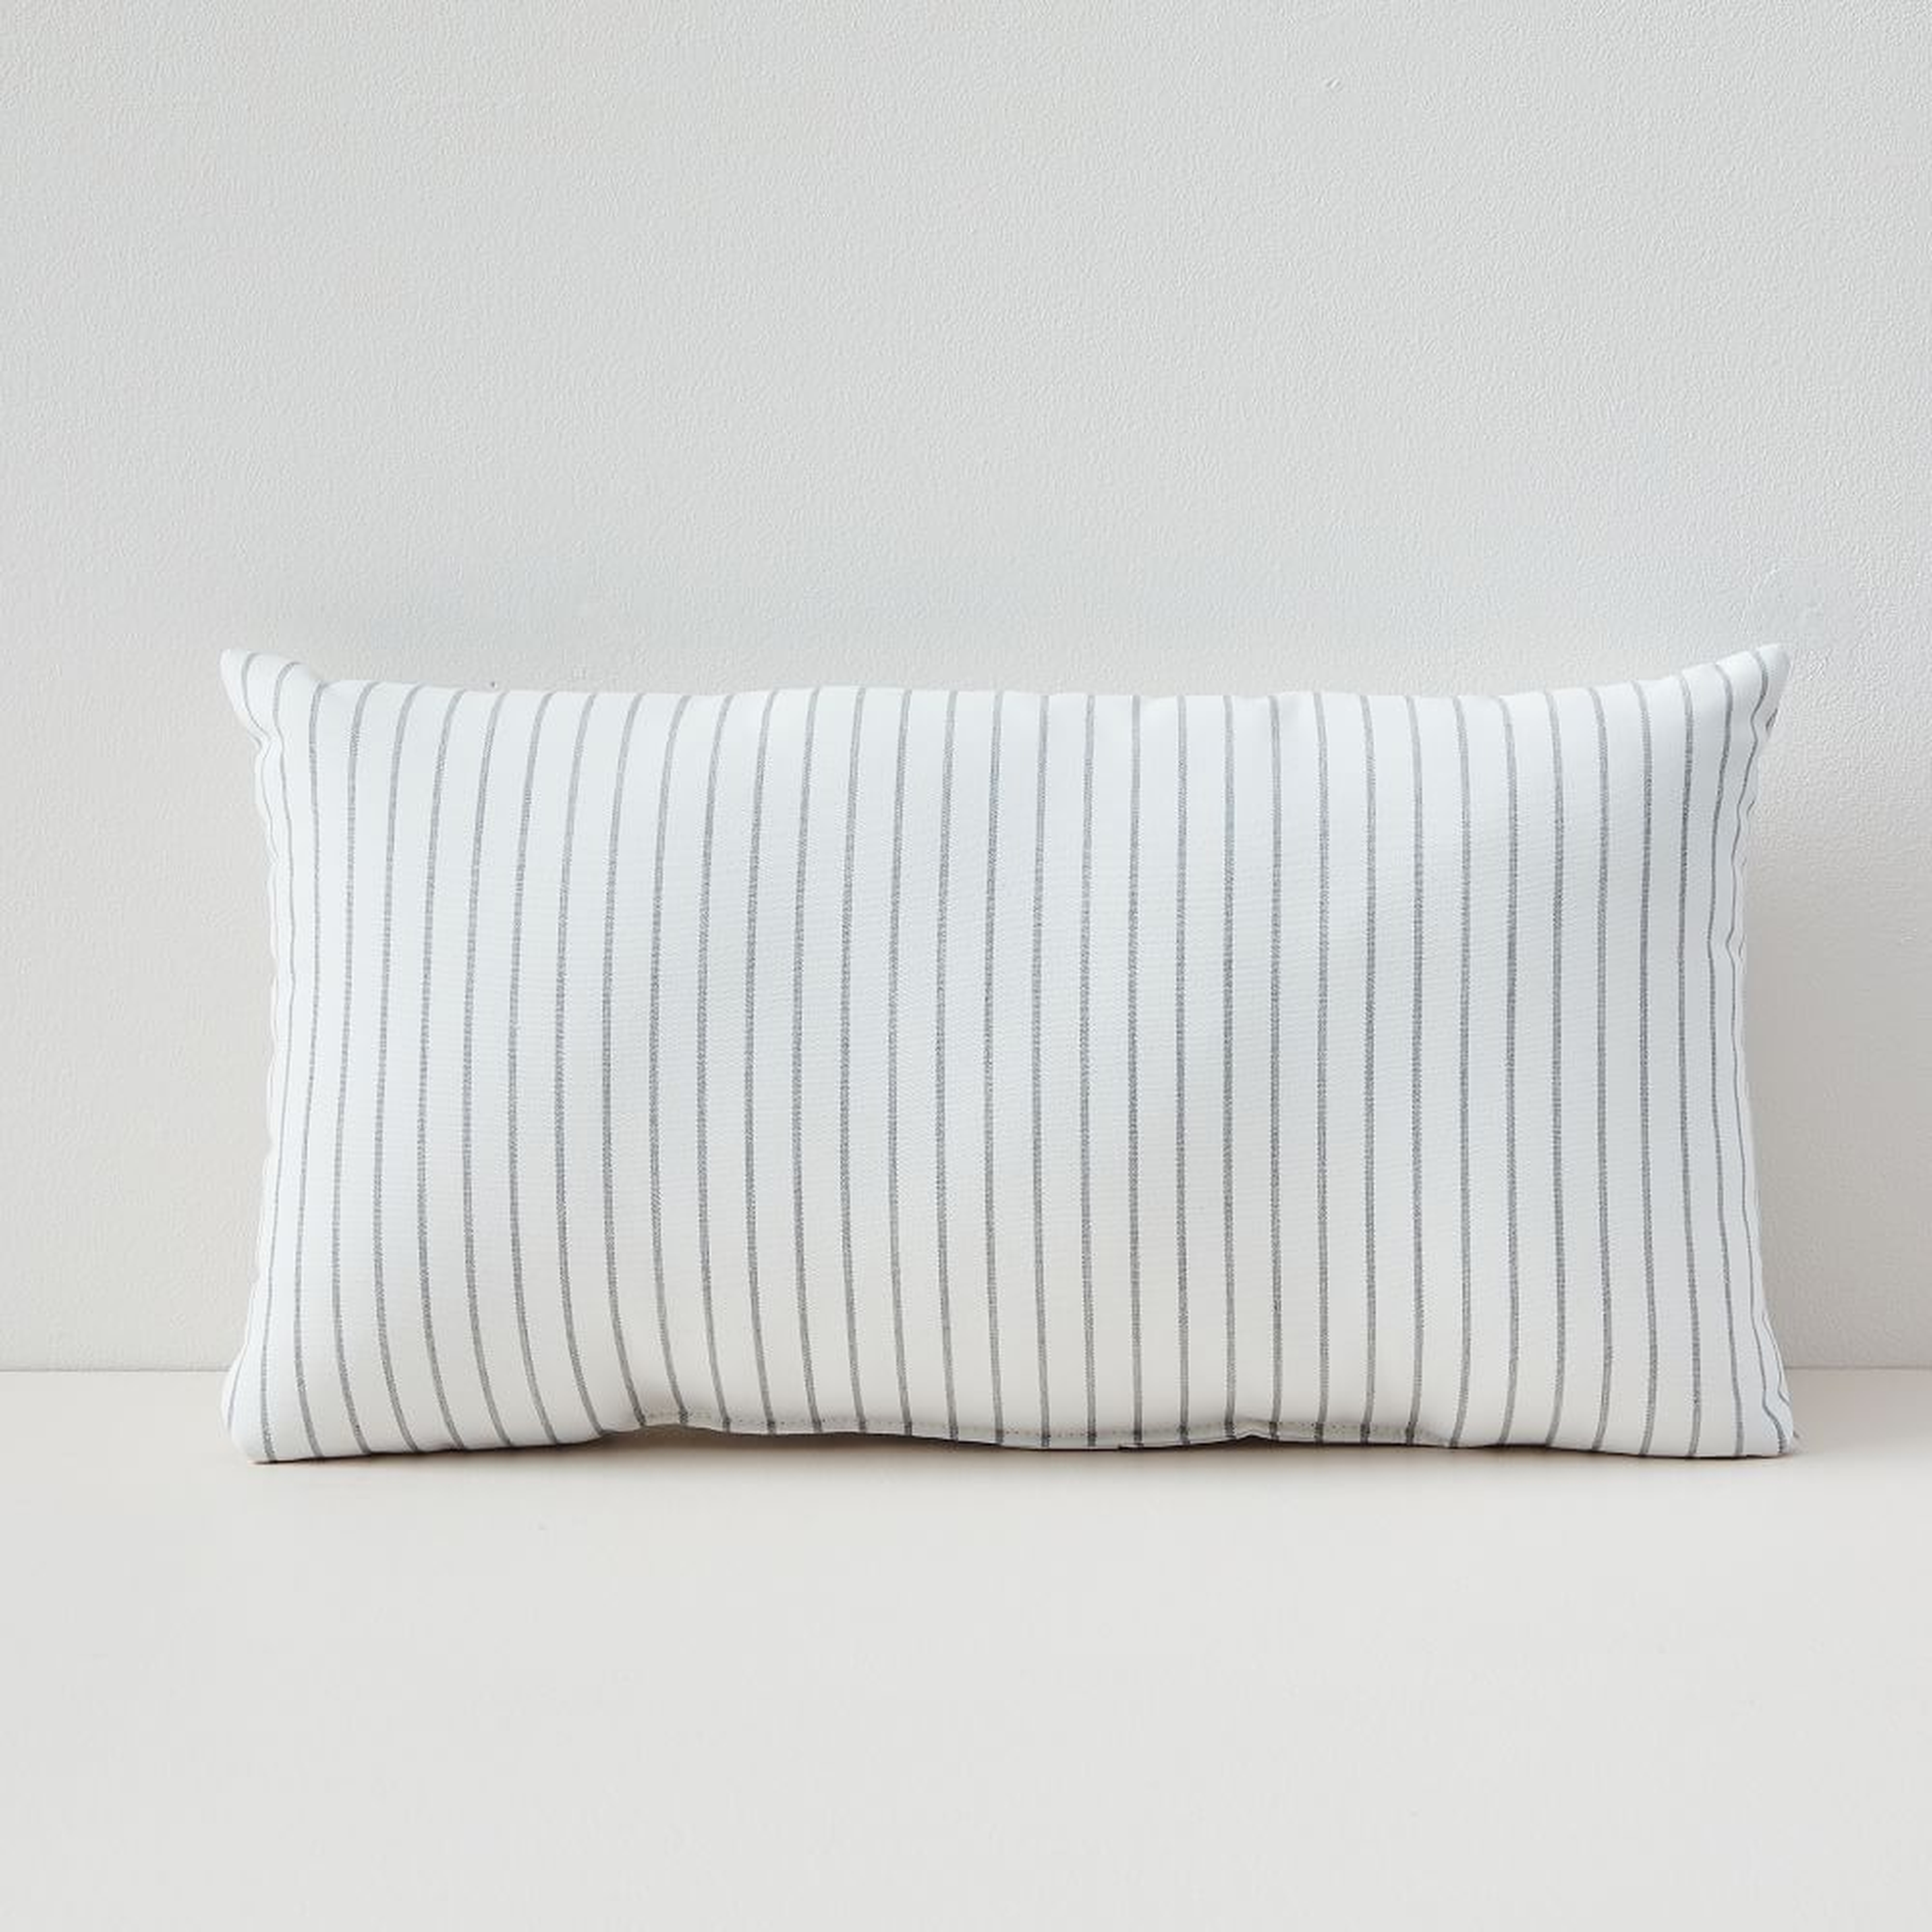 Sunbrella Indoor/Outdoor Striped Lumbar Pillow, Cloud, 12"x21" - West Elm